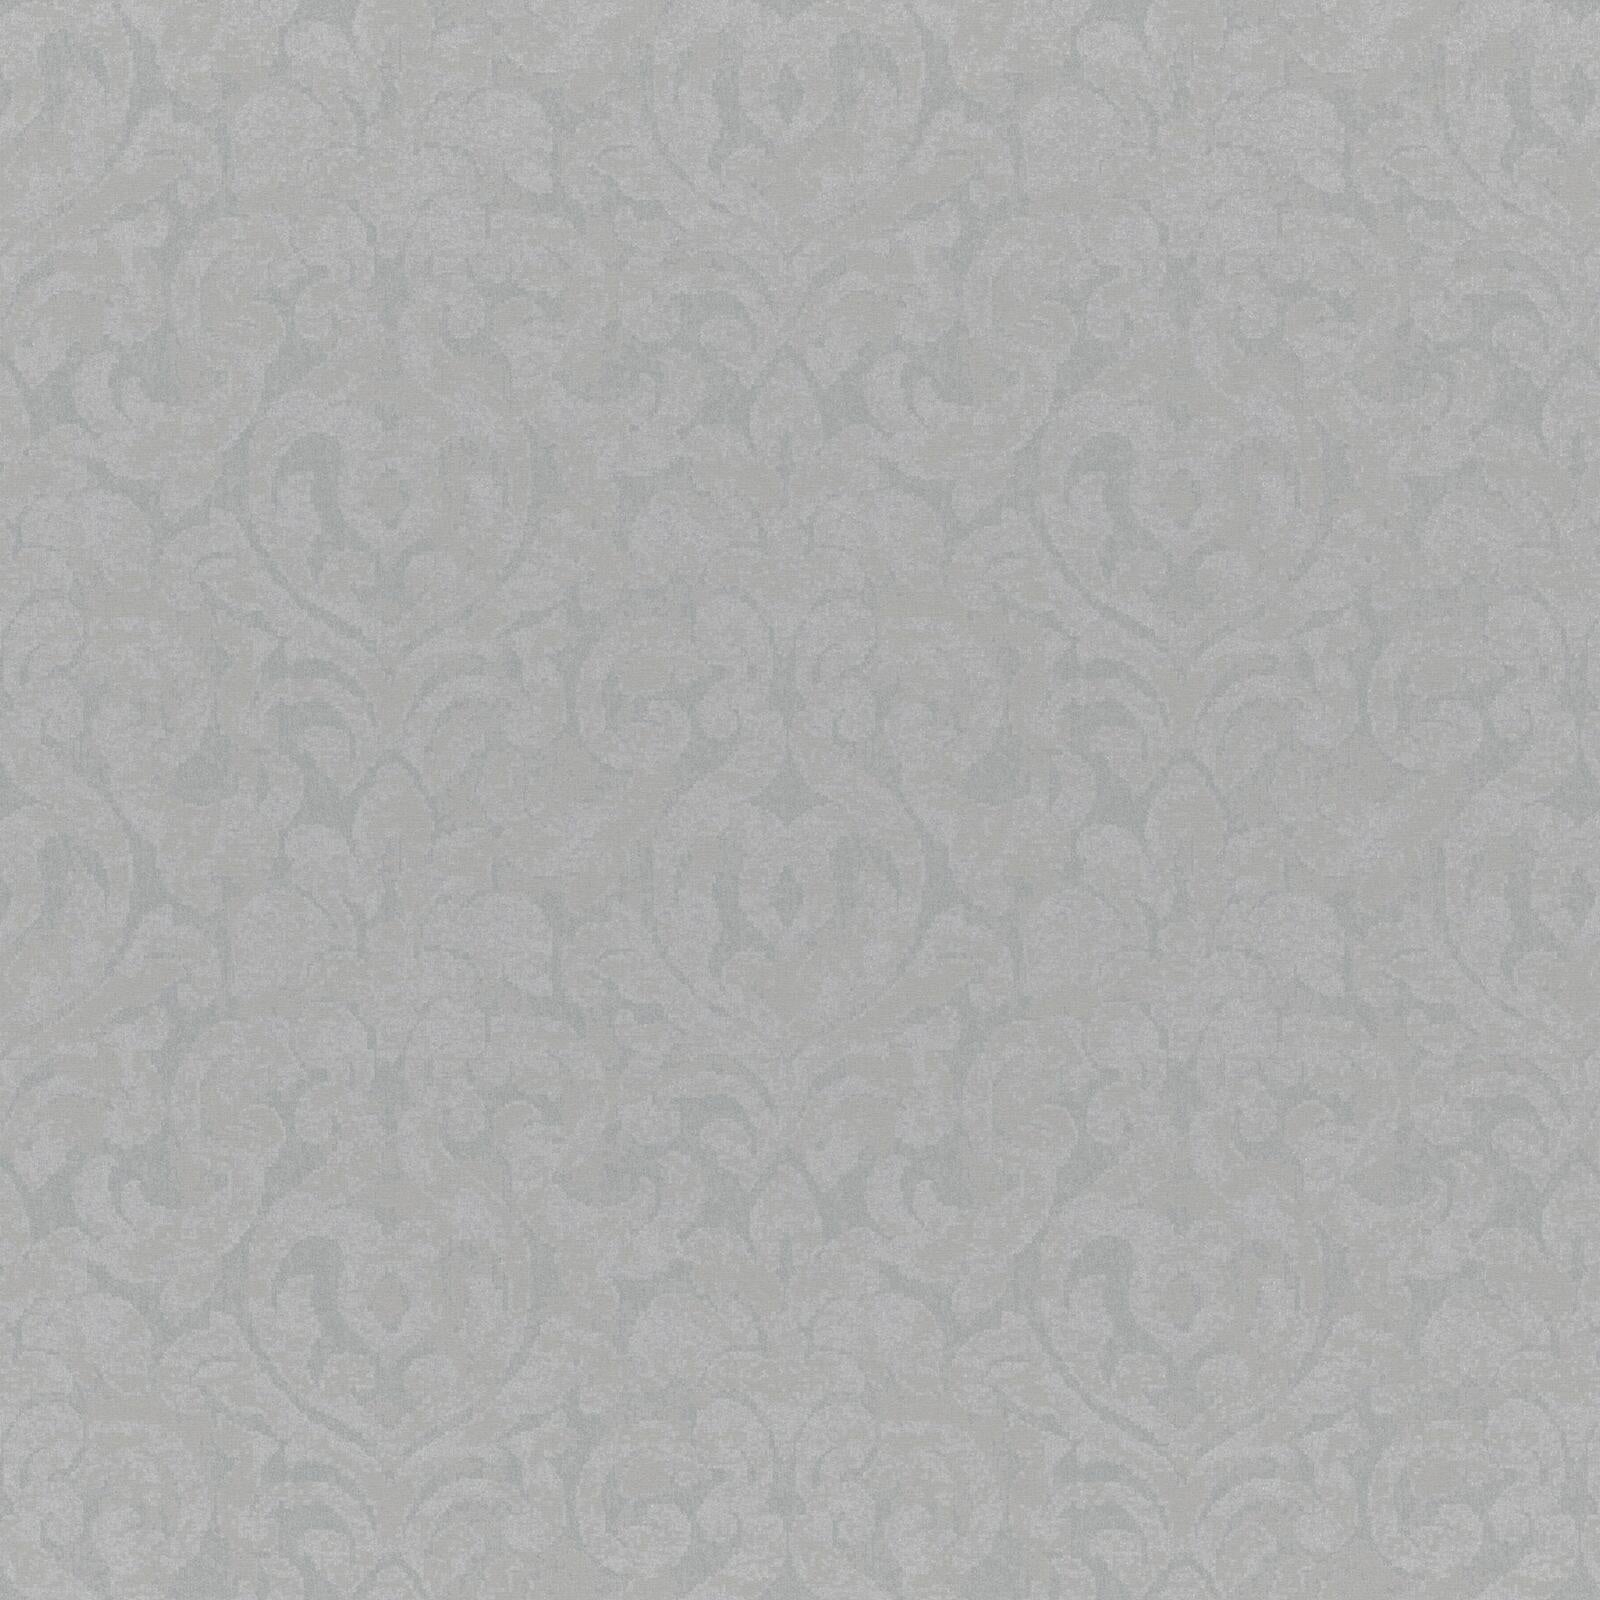 Purchase Maxwell Fabric - Nederlander, # 604 Silver